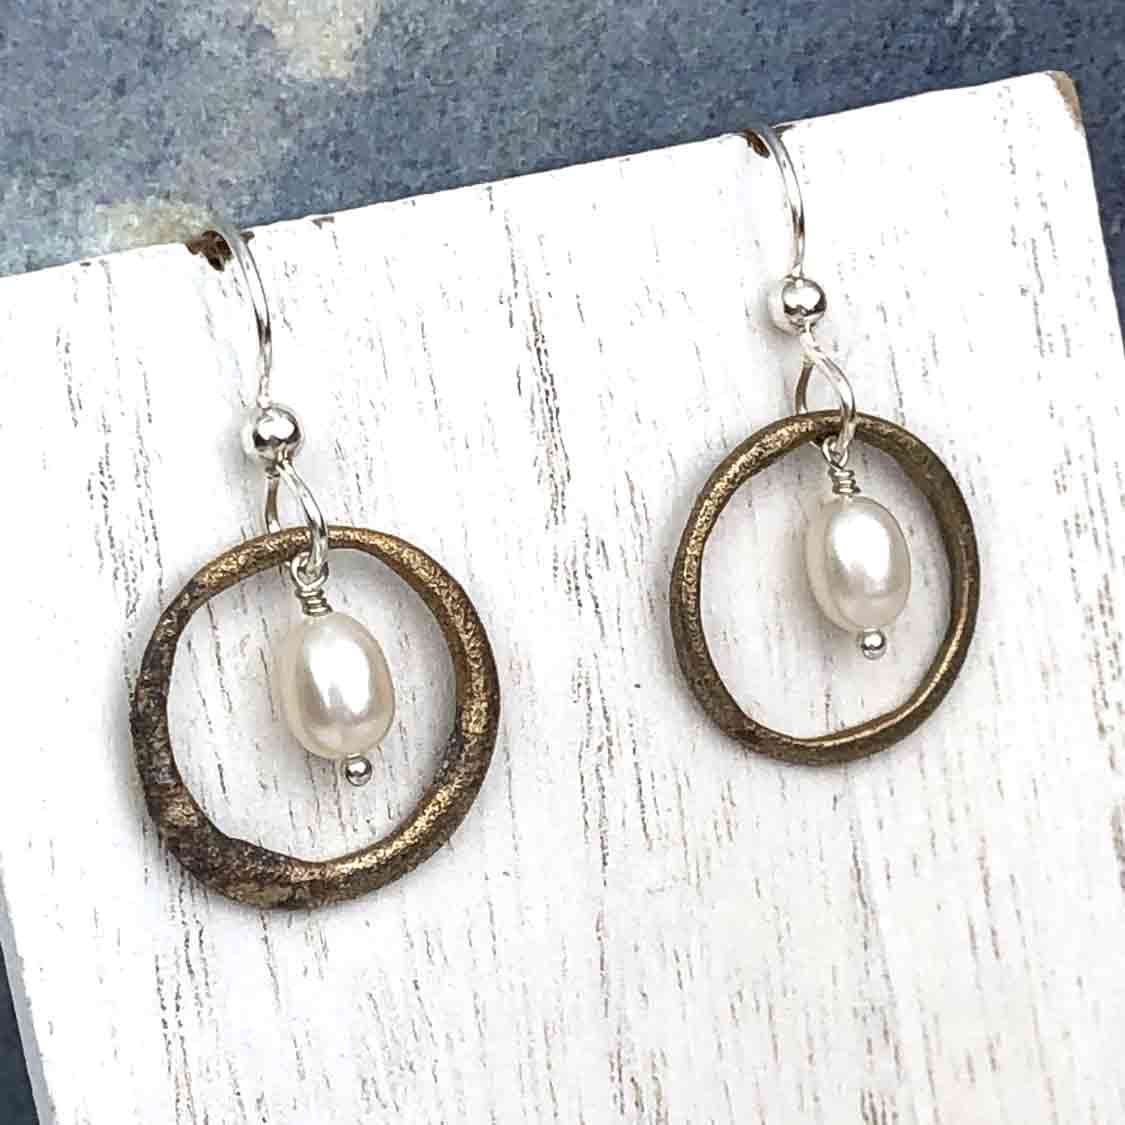 Dark Flecked Bronze Celtic Ring Money Earrings with Genuine Pearls